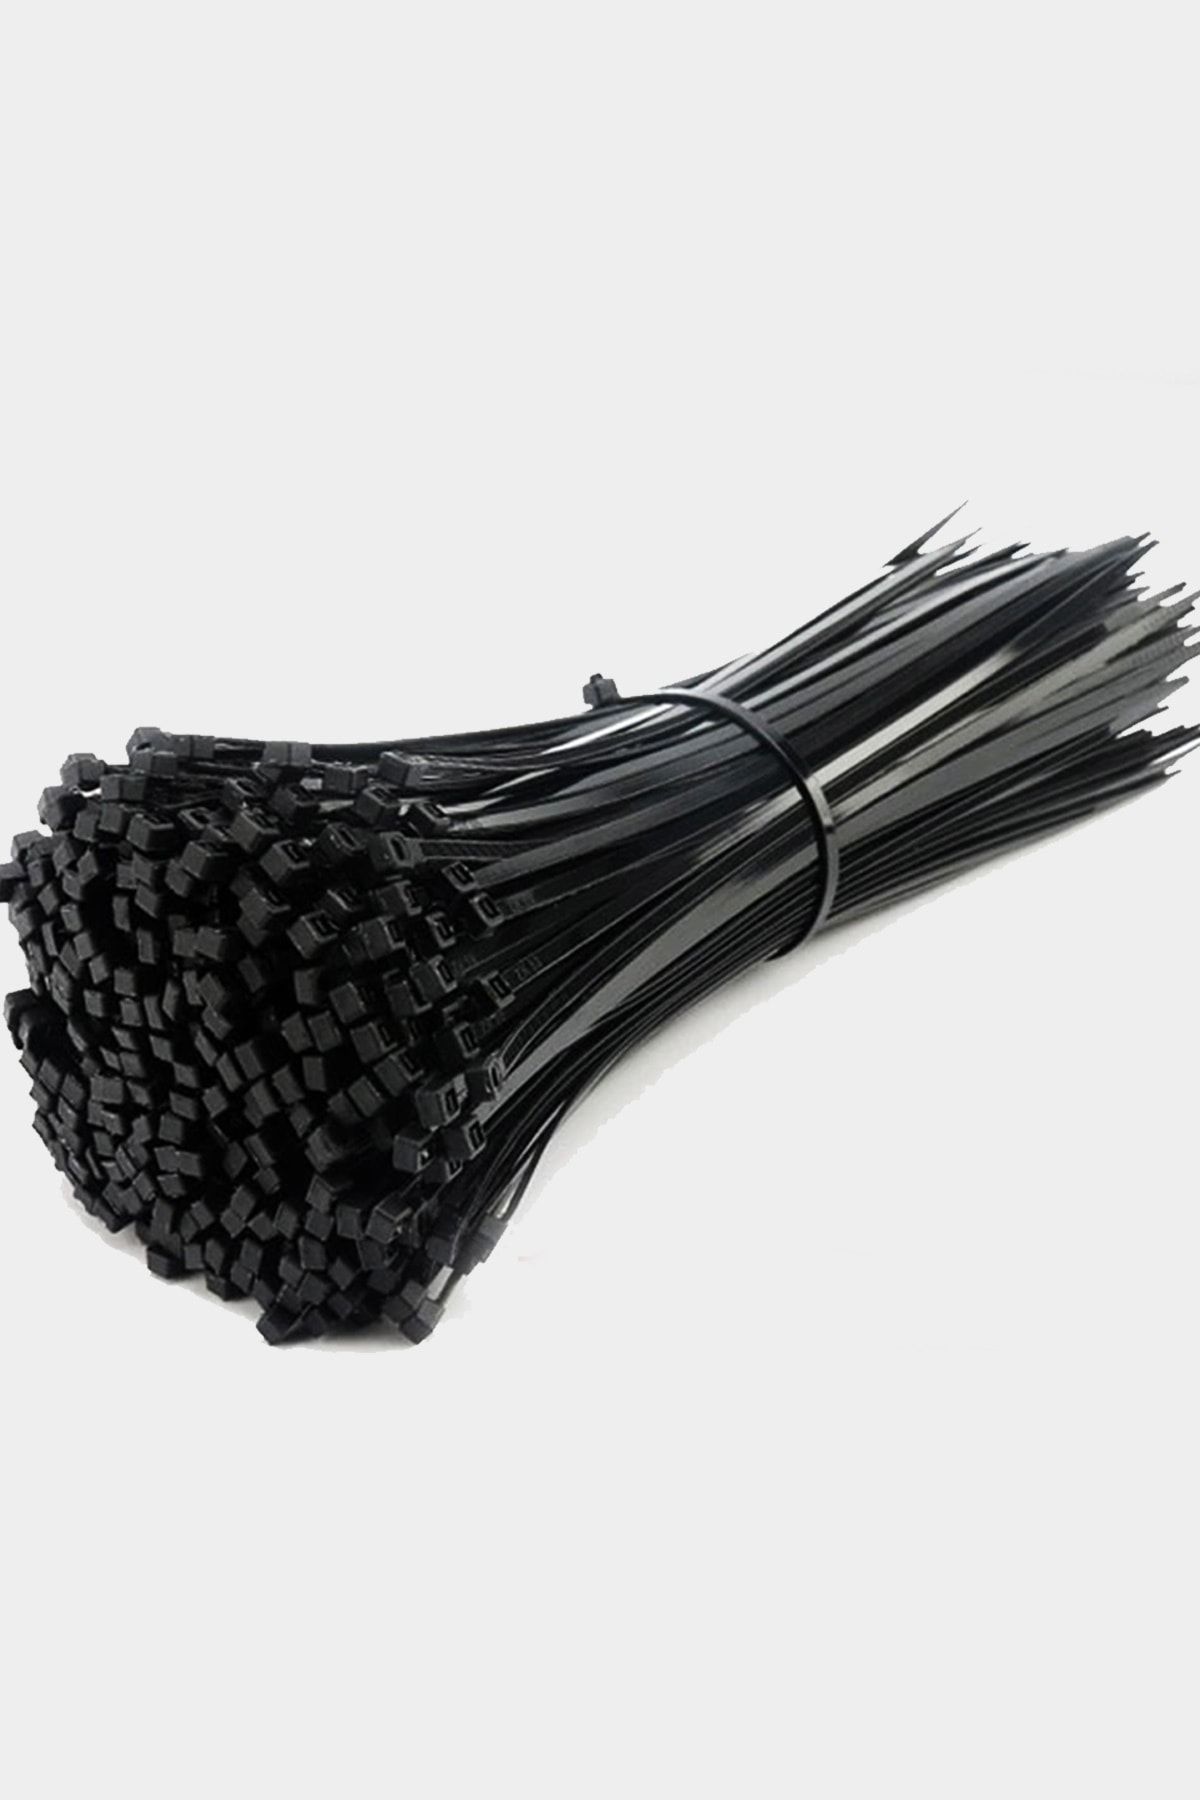 Uniquem 100 Adet Siyah Plastik Kelepçe Cırt Kablo 4,8 25 cm Uzunluk